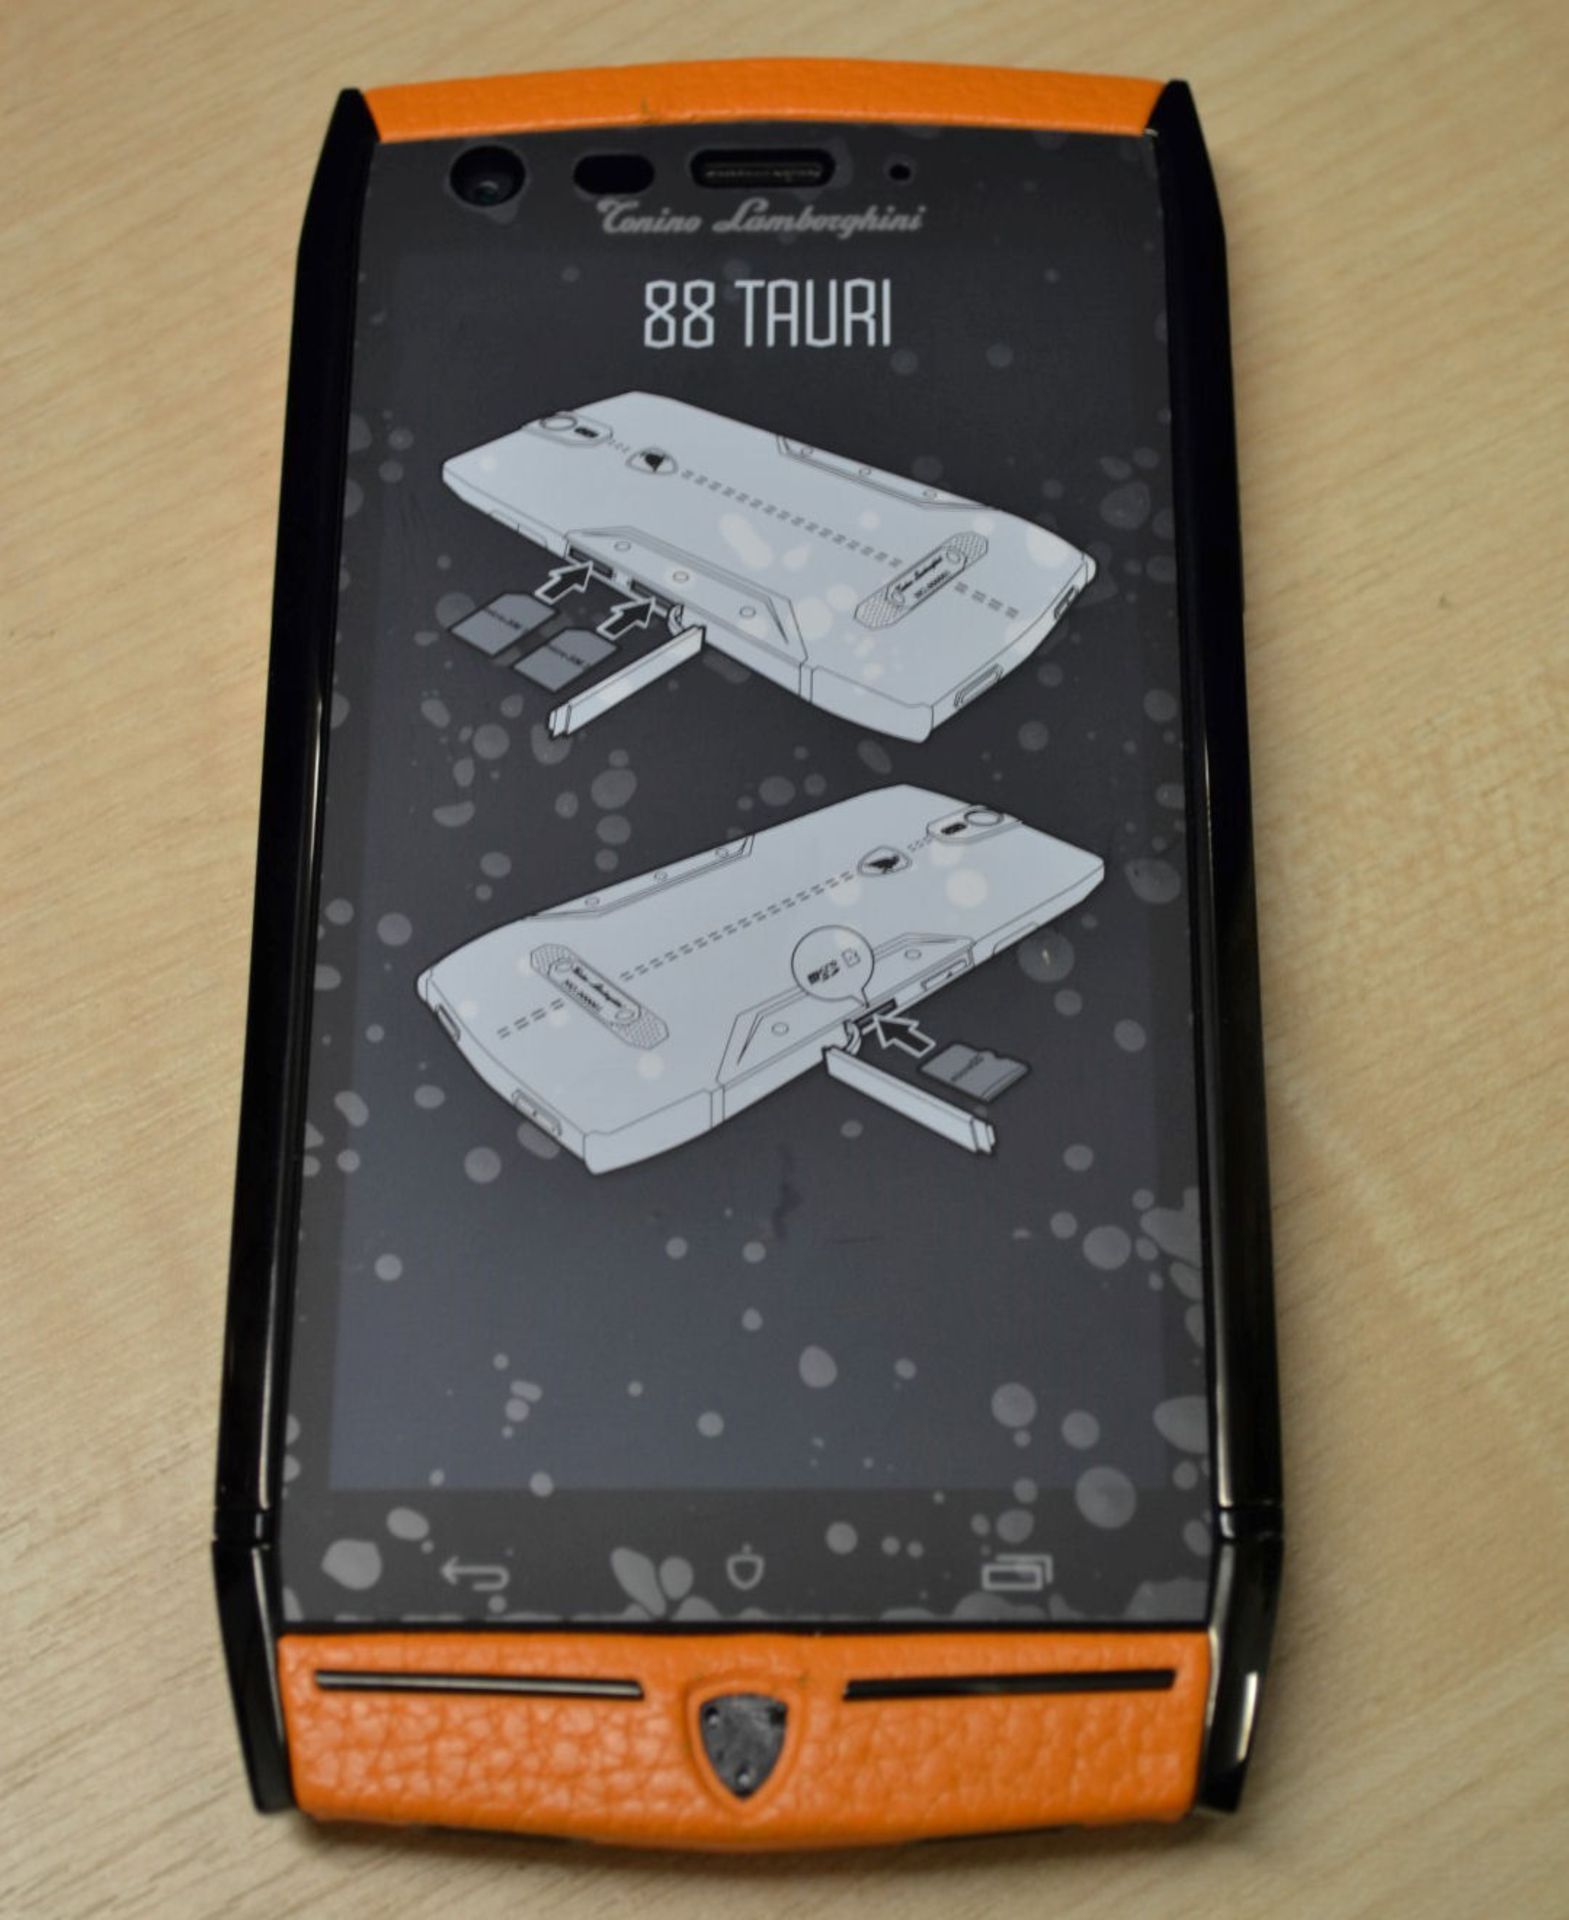 1 x Limited Edition Lamborghini "88 Tauri" Android Smart Phone - Orange - Original RRP £4500 - Image 7 of 27